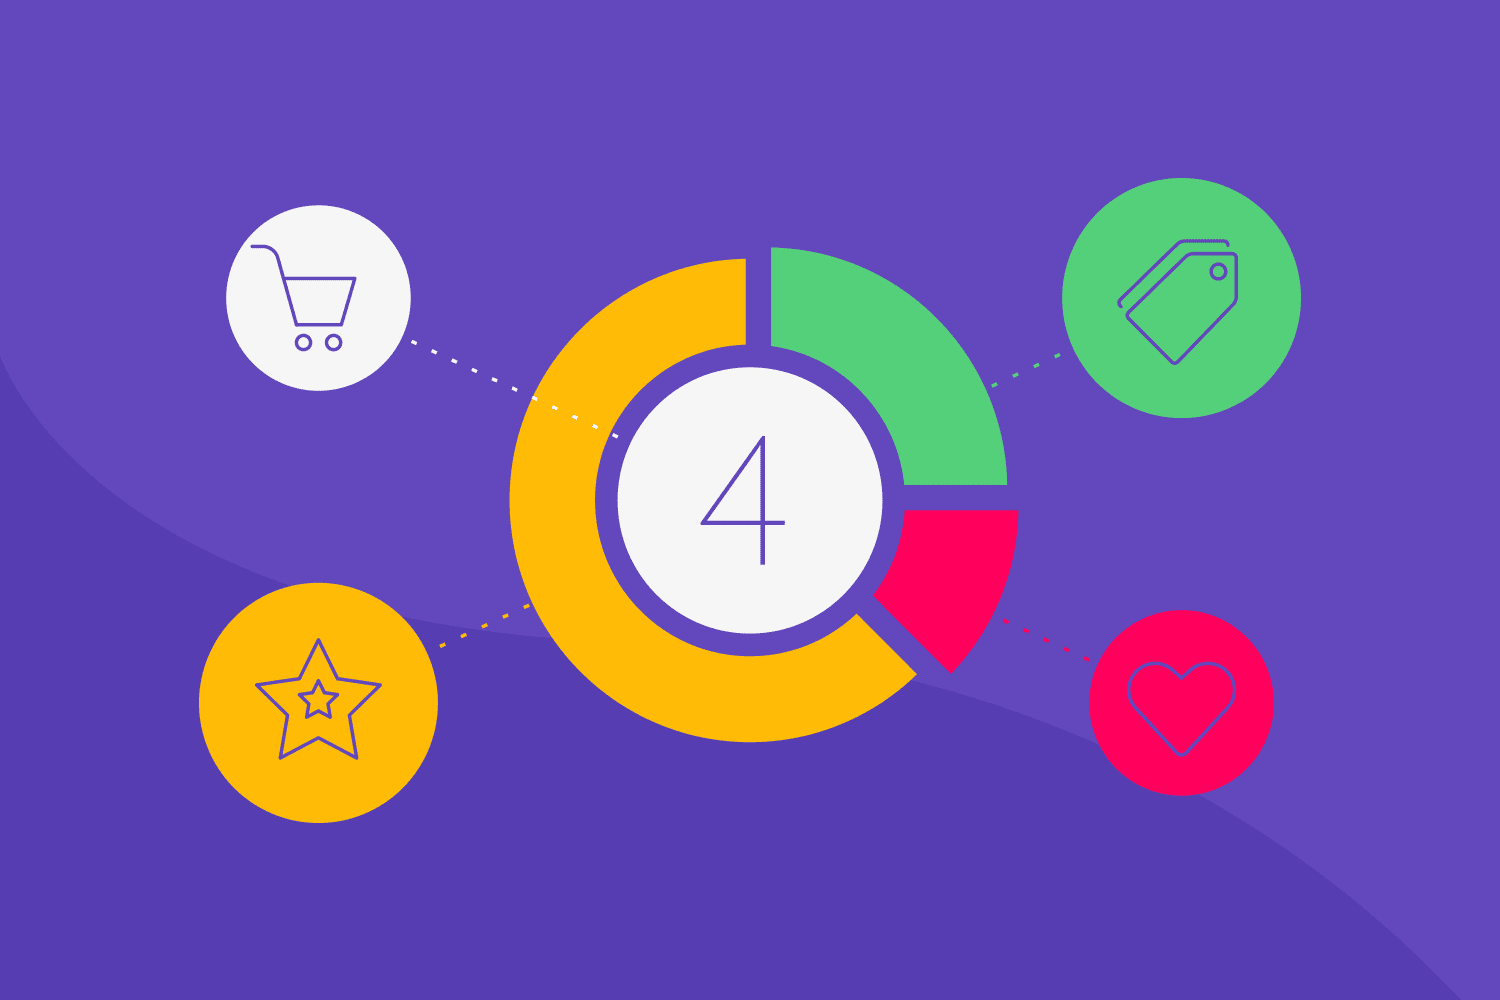 4 icons to represent ecommerce customer segments